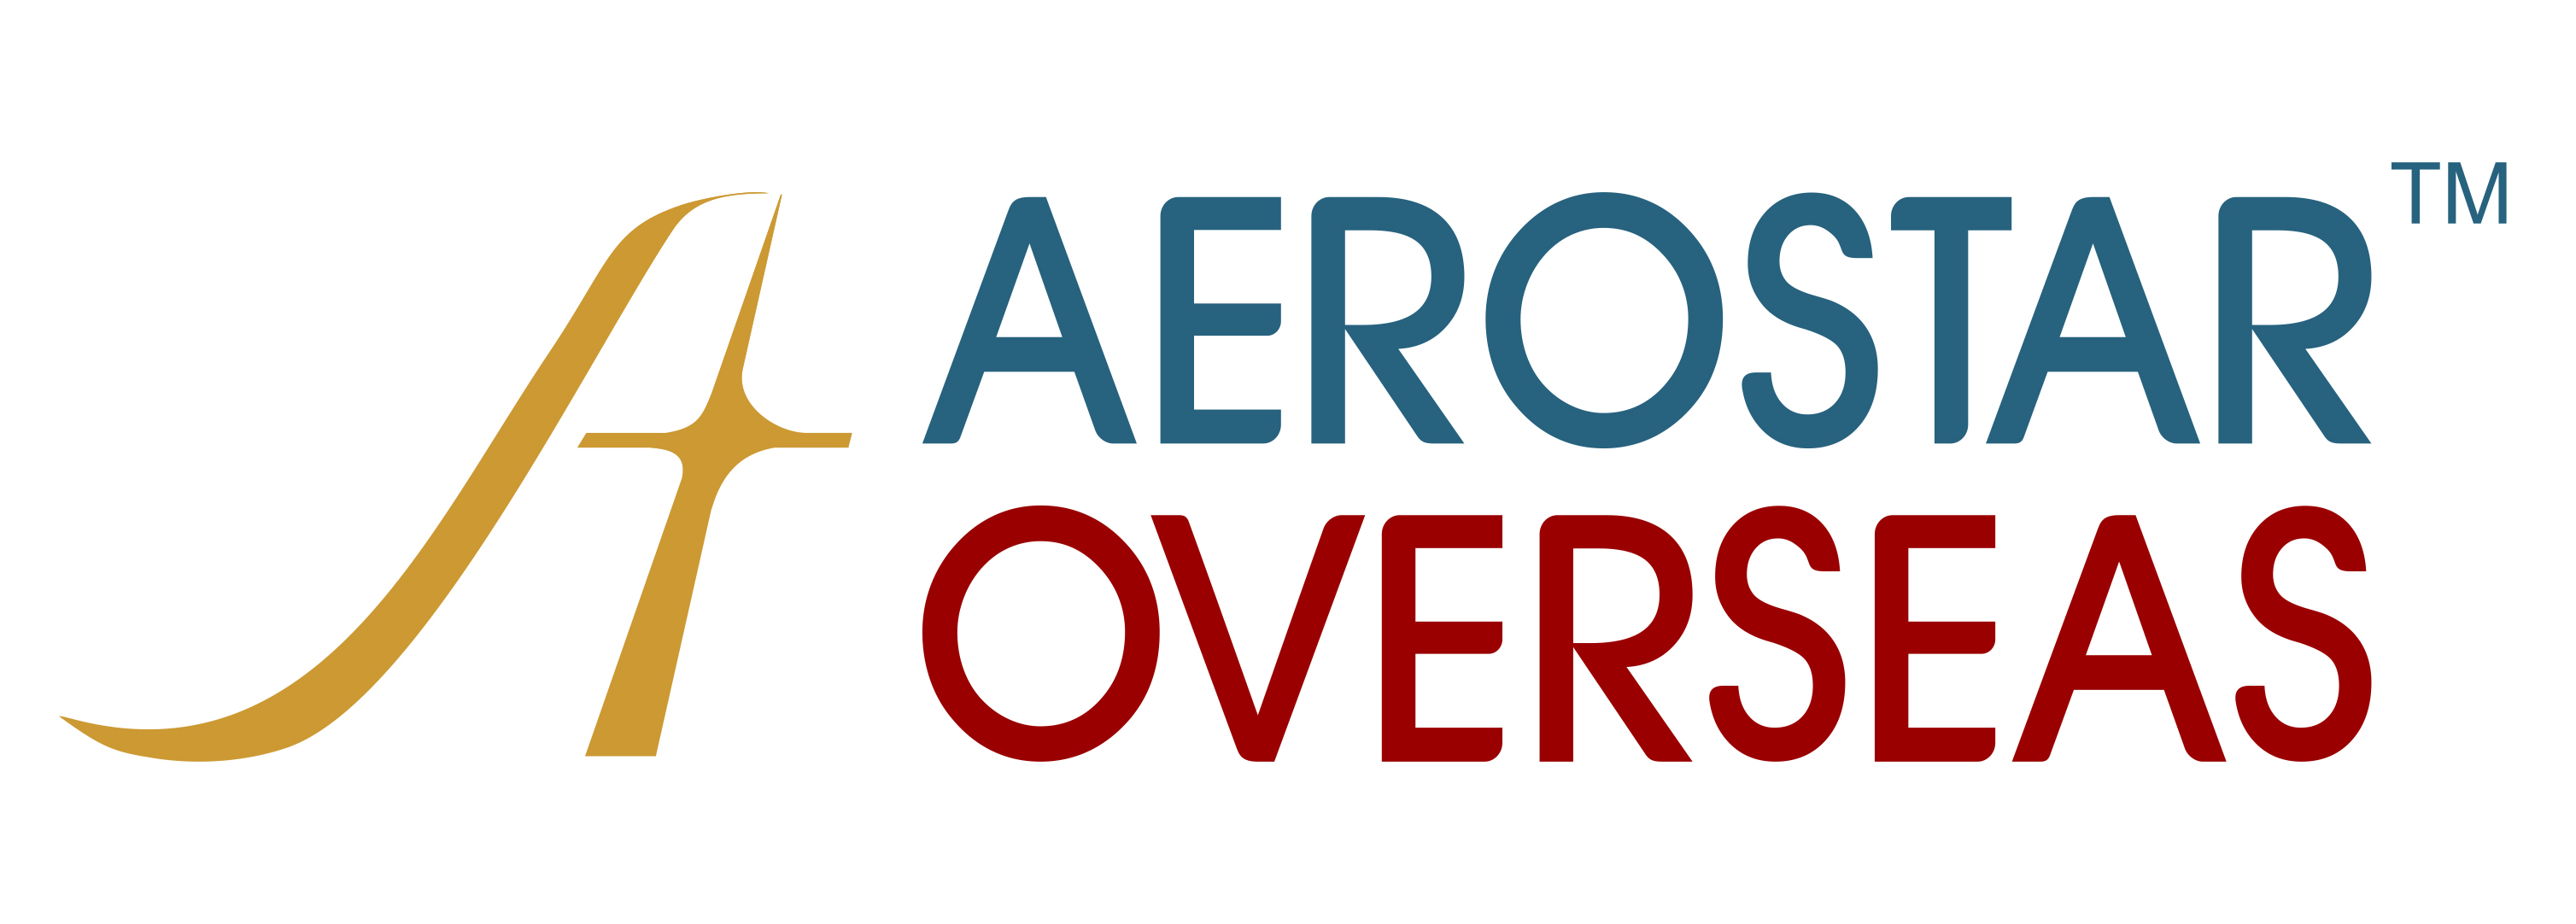 aerostaroverseas|Colleges|Education